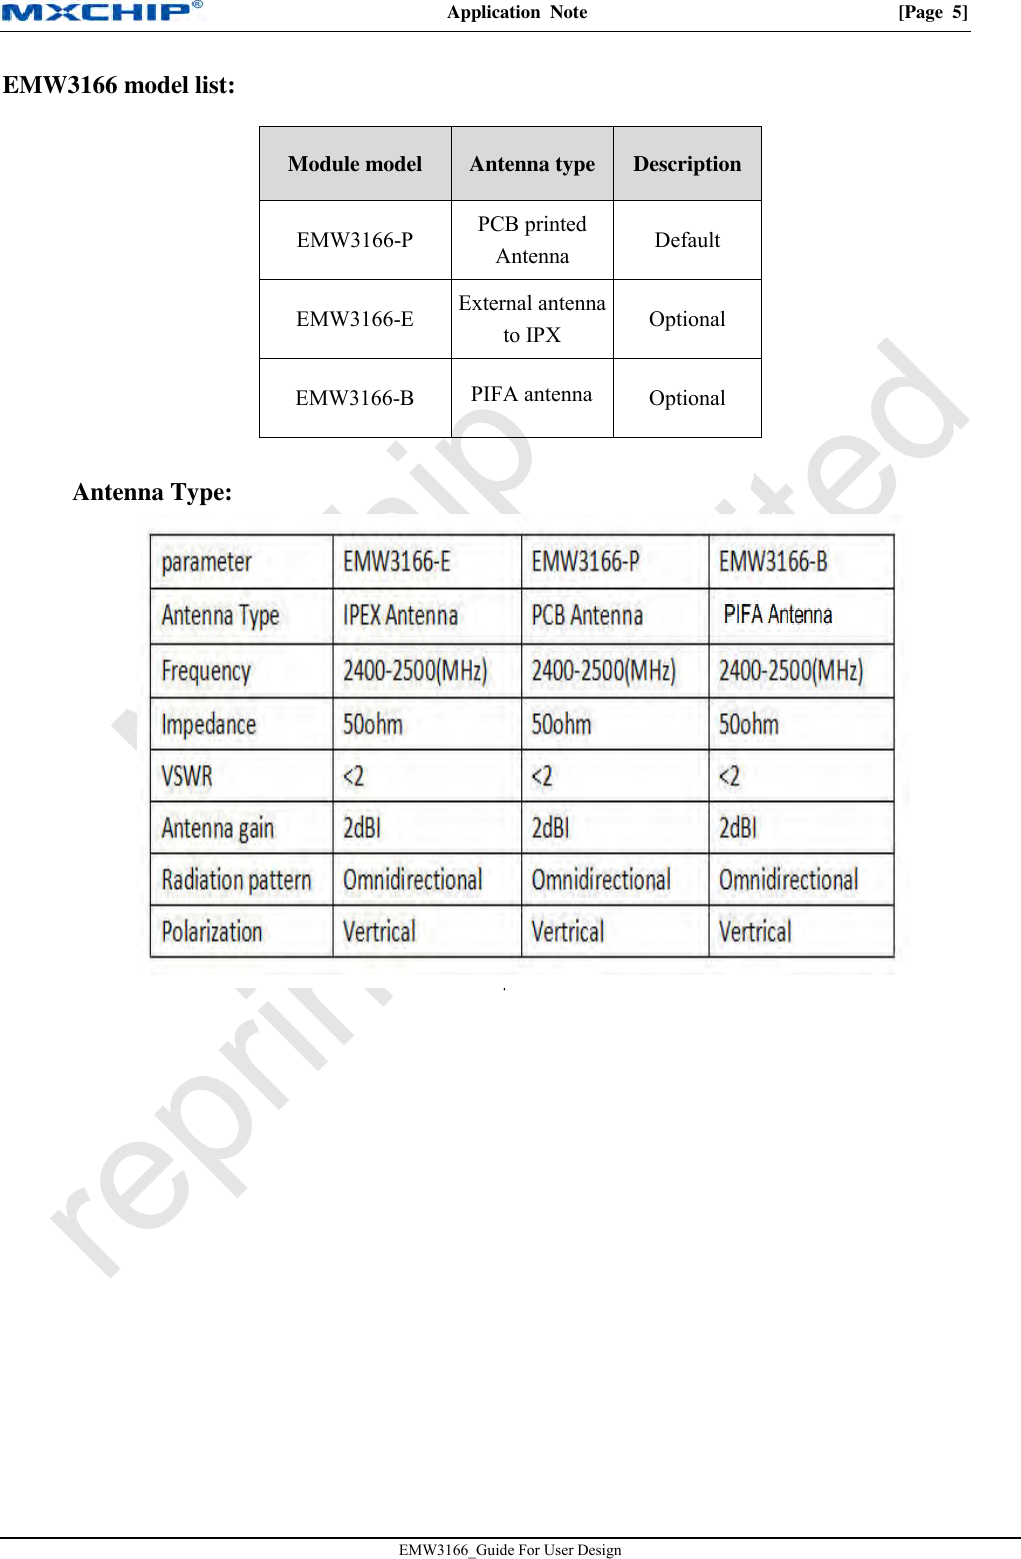 Application  Note  [Page  5] EMW3166_Guide For User Design EMW3166 model list: Module model Antenna type Description EMW3166-P PCB printed Antenna Default EMW3166-E External antenna to IPX Optional EMW3166-B PIFA antennaOptional EMW3166 Wi-Fi Module Hardware BlockNetworkProcessorADCFlash1M bytesWLANSubsystem2.4GHz radioU.F.L connectorOn-boardPCB AntFlash 2M bytesPowerMangement3.3V Input26MHzOSC26MHzOSCSRAM256K bytes32.768KHzOSCTimer/PWMUARTI2CGPIOSPISDIOSPI802.11b/g/n MAC/Baseband/radio 100MHzCortex-M4 MCUAntenna Type: